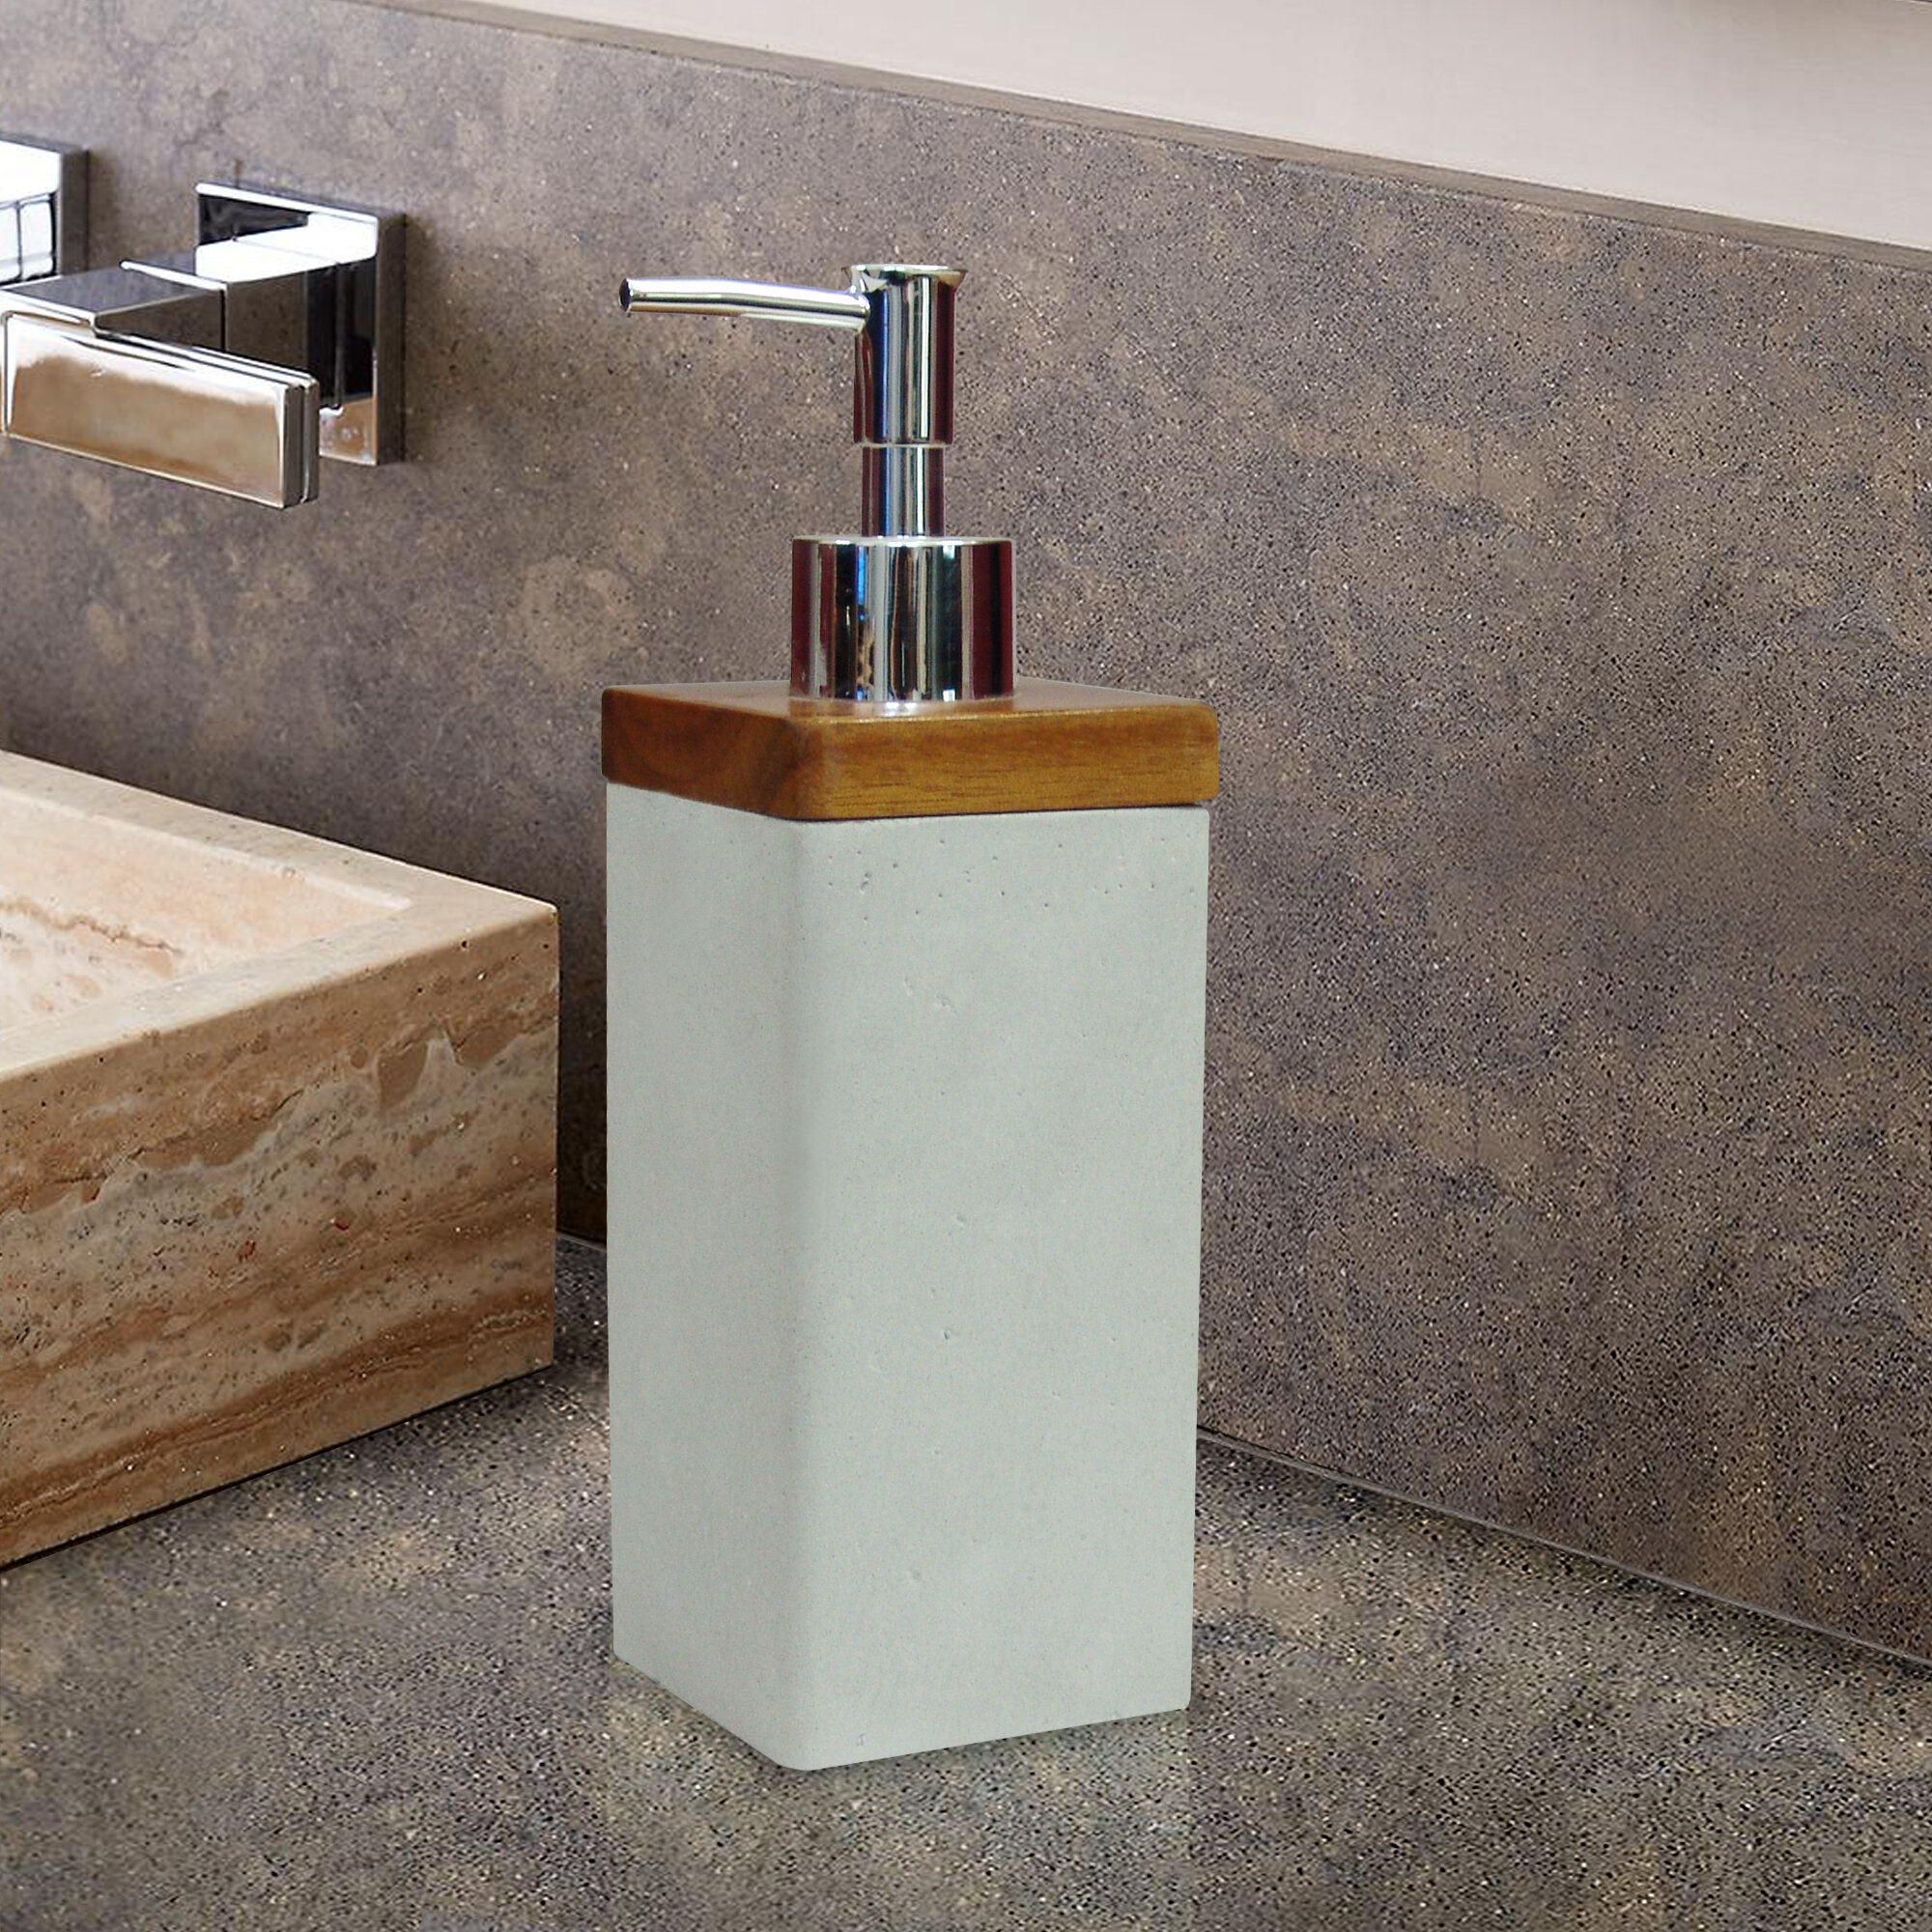 wood soap dispenser